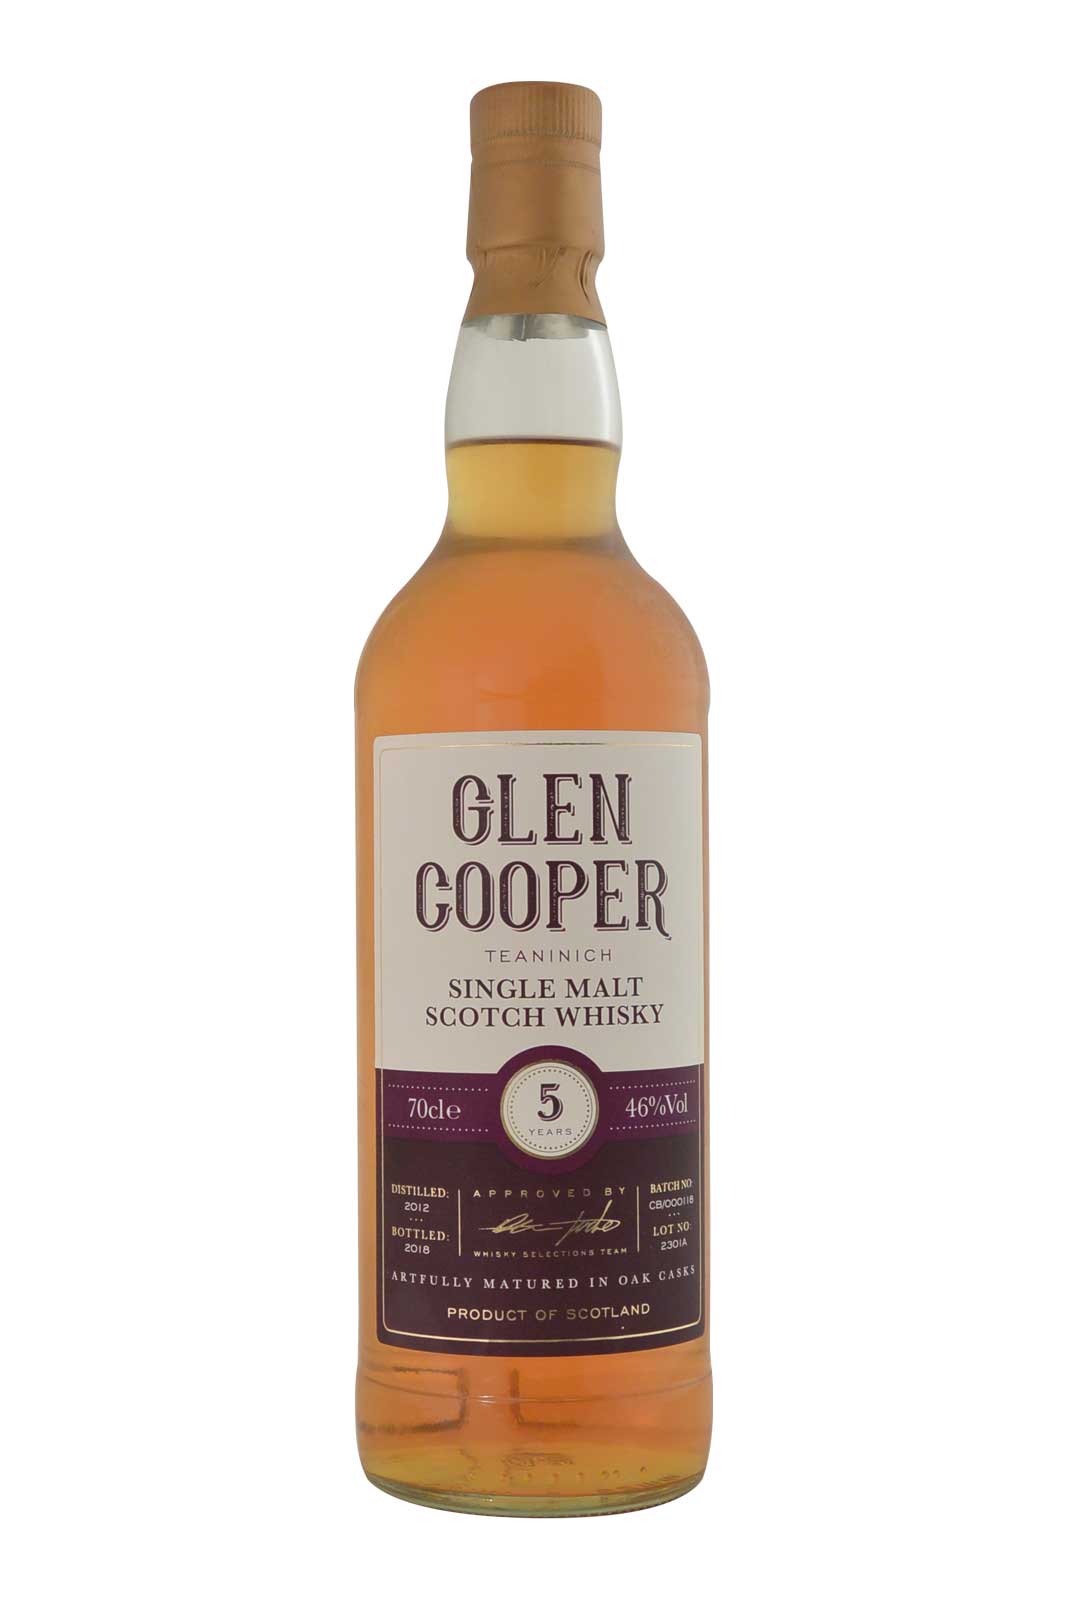 Glen Cooper - Teaninich 5 Year Old